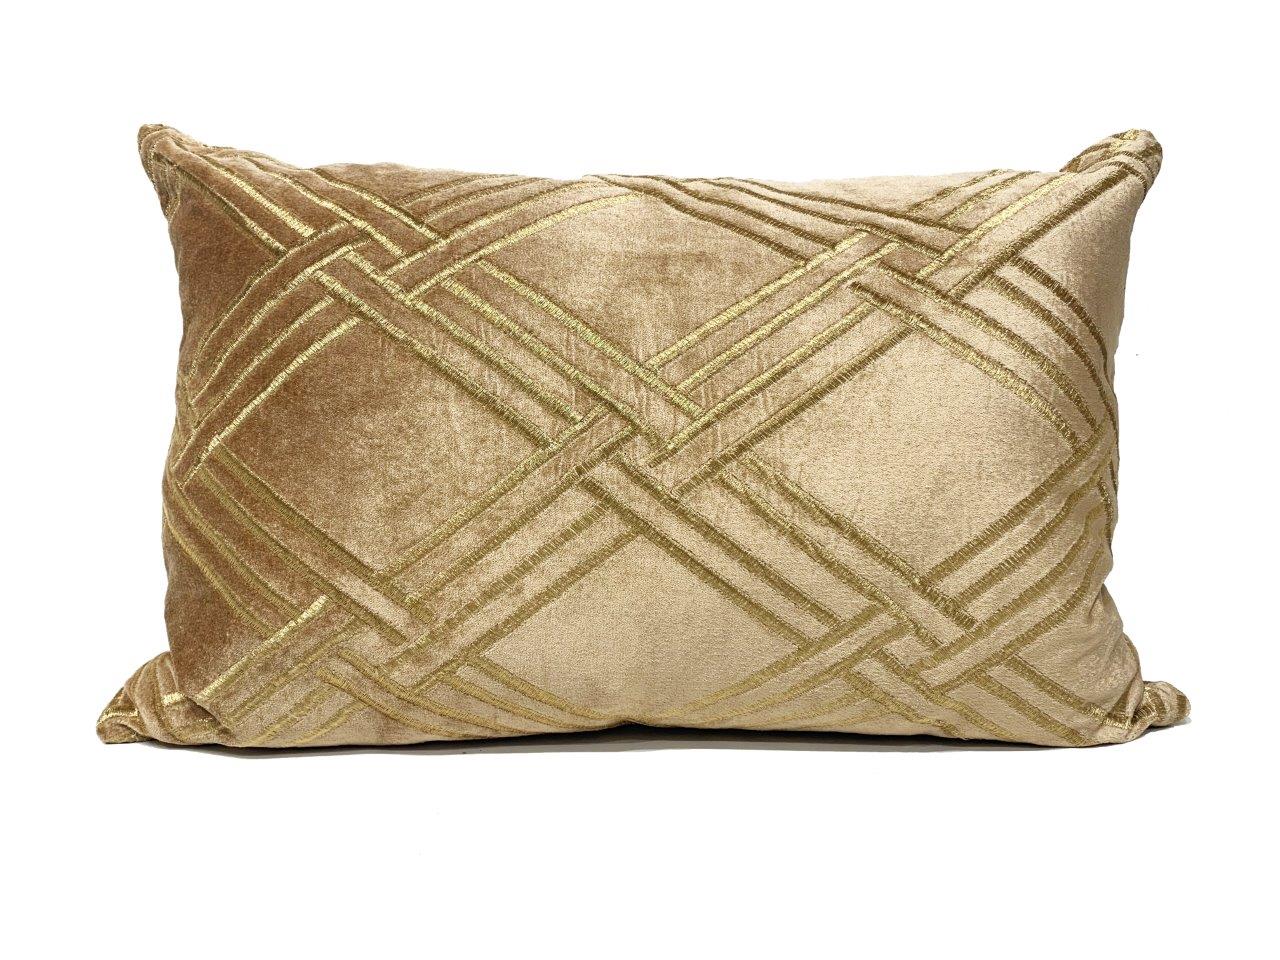 Nancy X | Criss-Cross Embroidered Throw Pillow